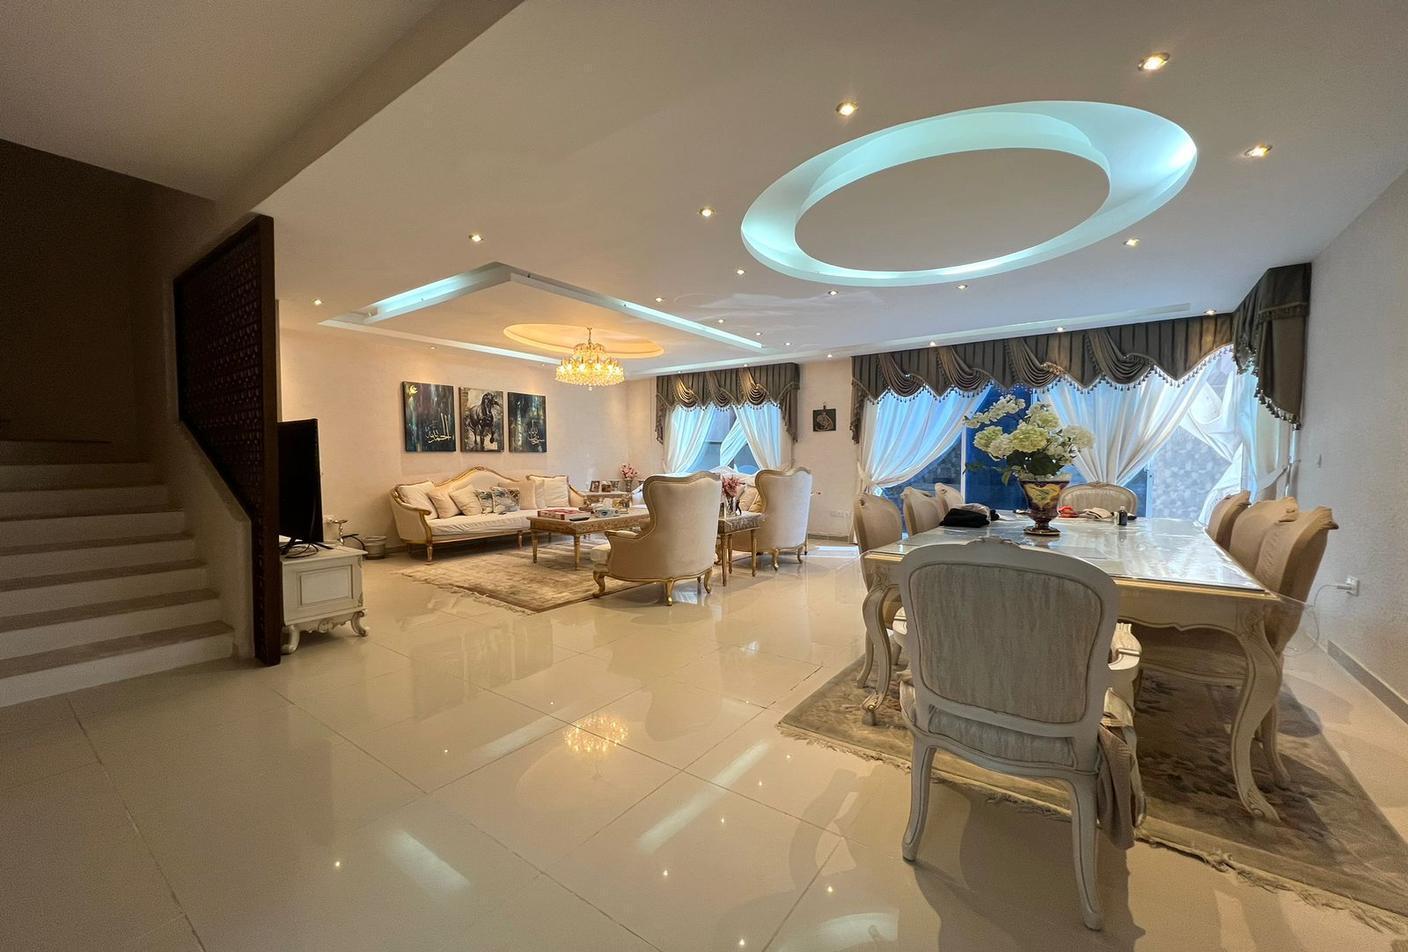 5 bed, 6 bath Villa for sale in Arabian Style, Al Reef Villas, Al Reef, Abu Dhabi for price AED 2700000 